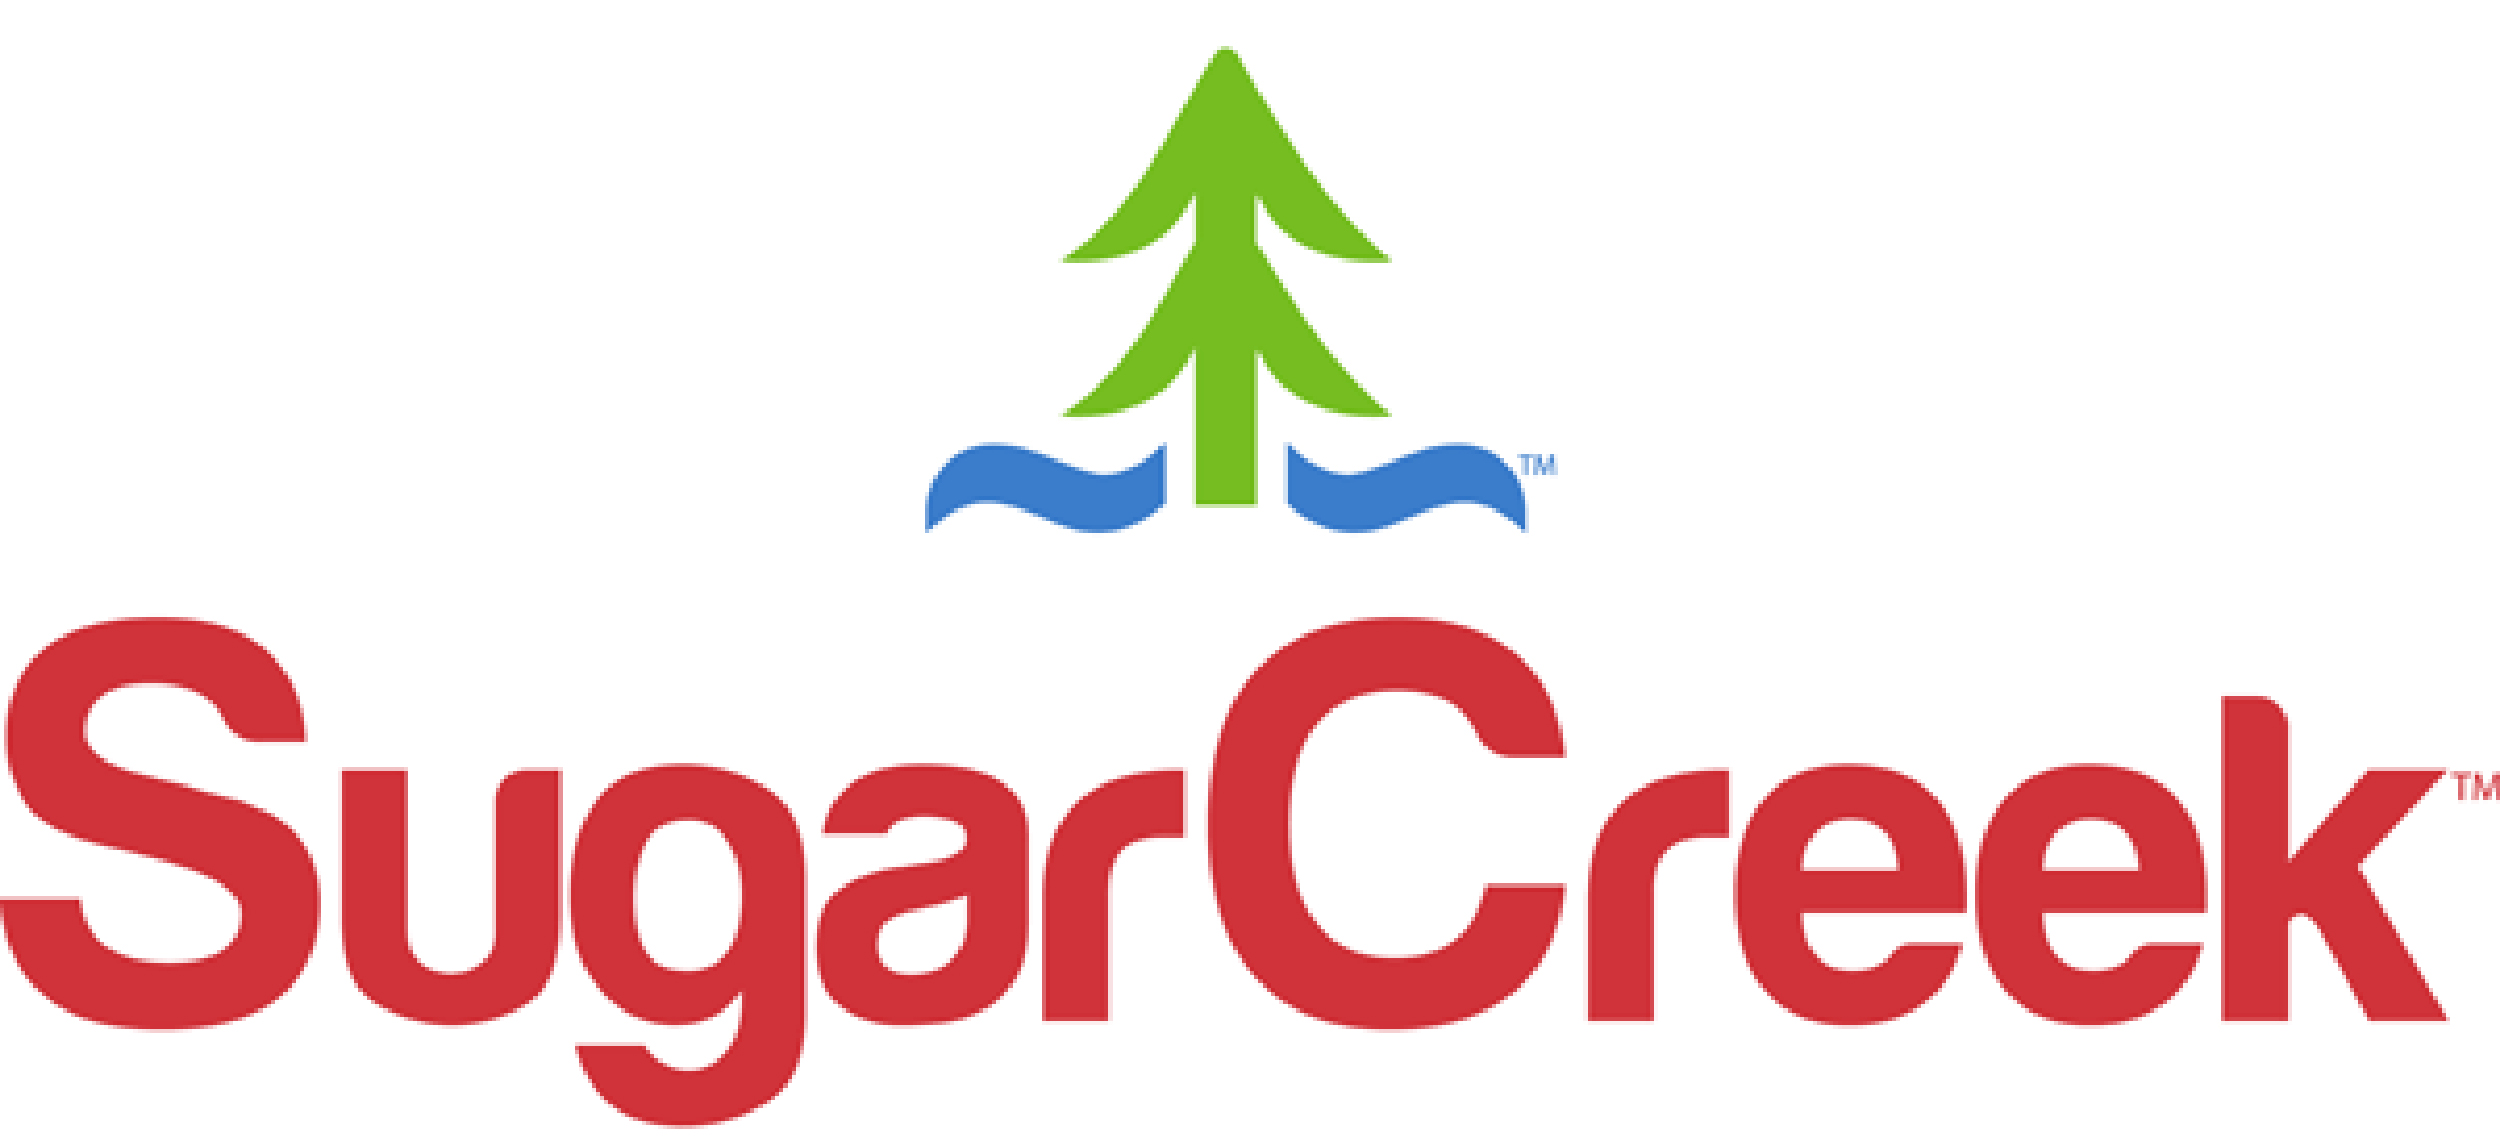 Sugar Creek logo